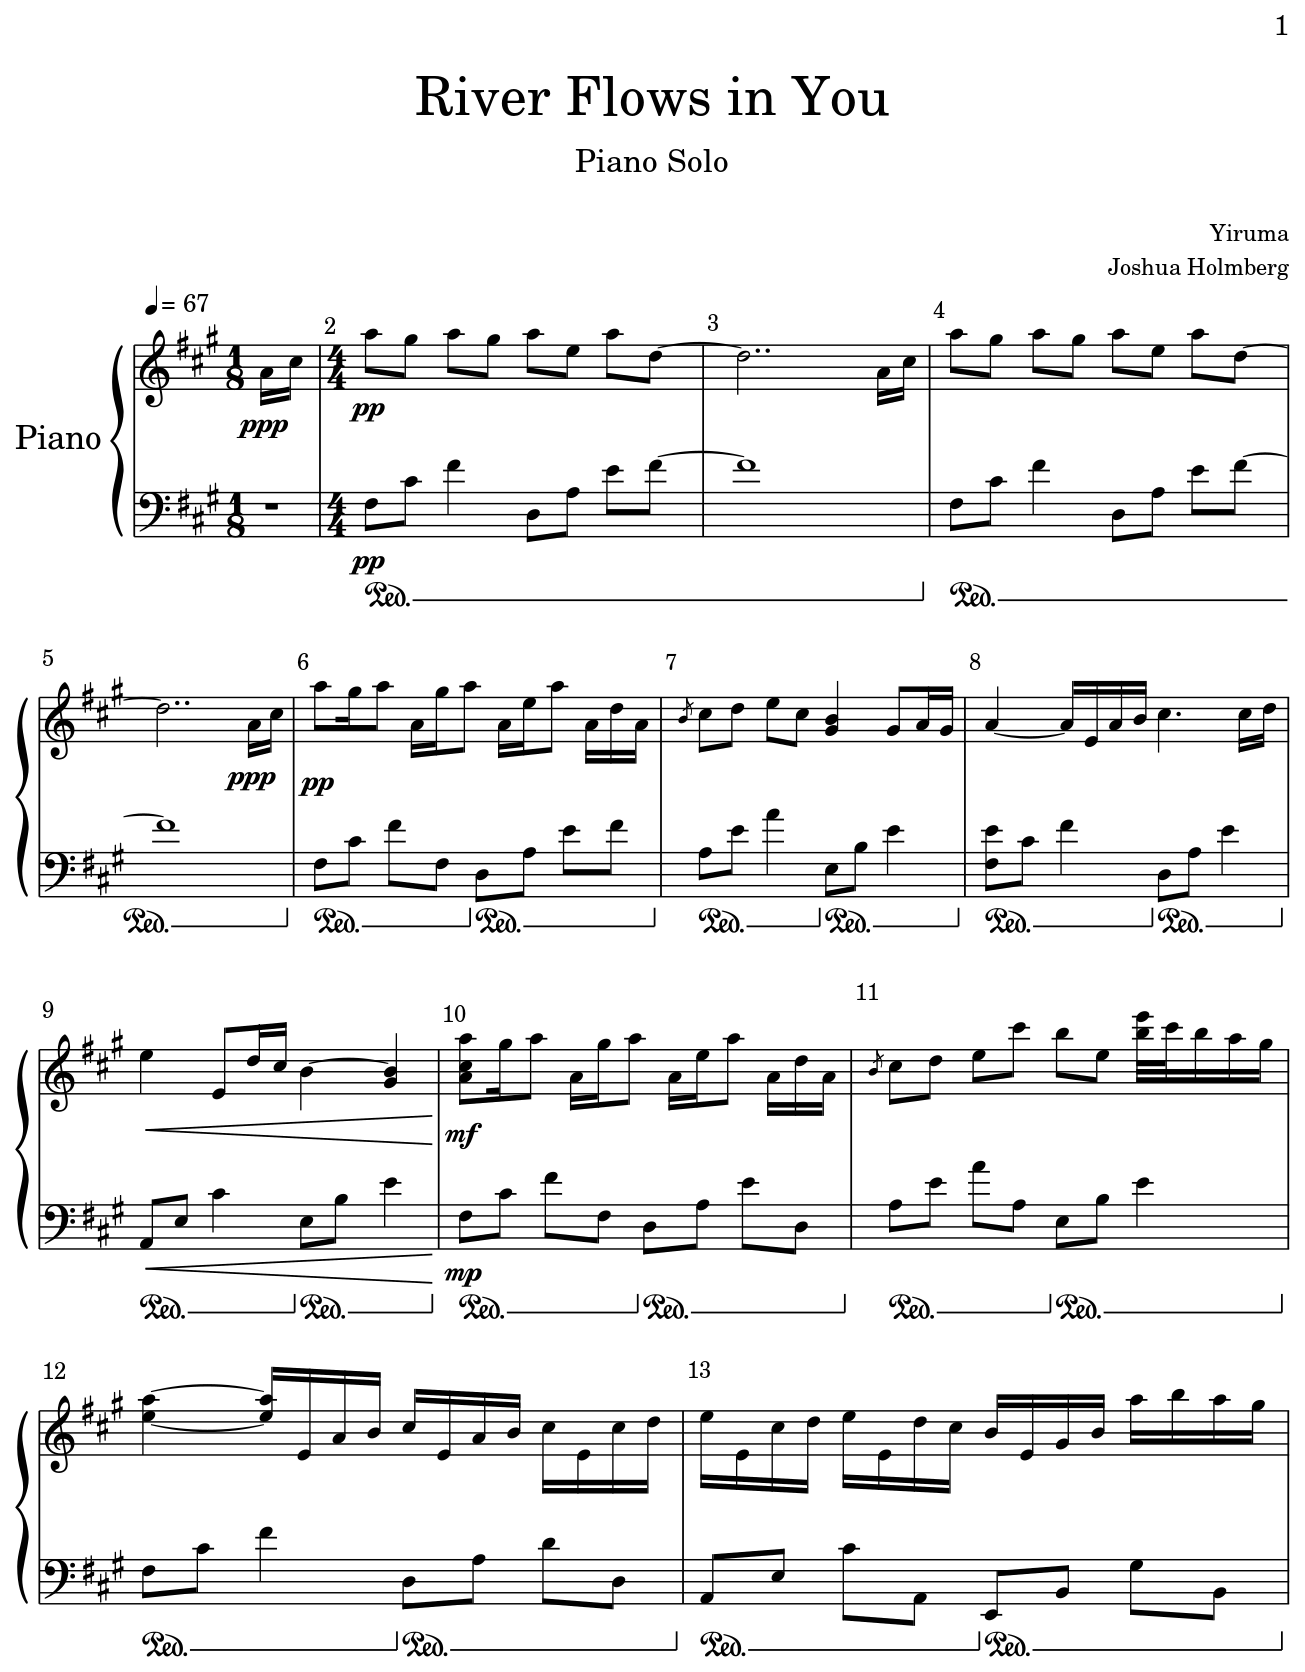 Easy River Flows In You Piano Sheet Music - RIVER FLOWS IN YOU Yiruma